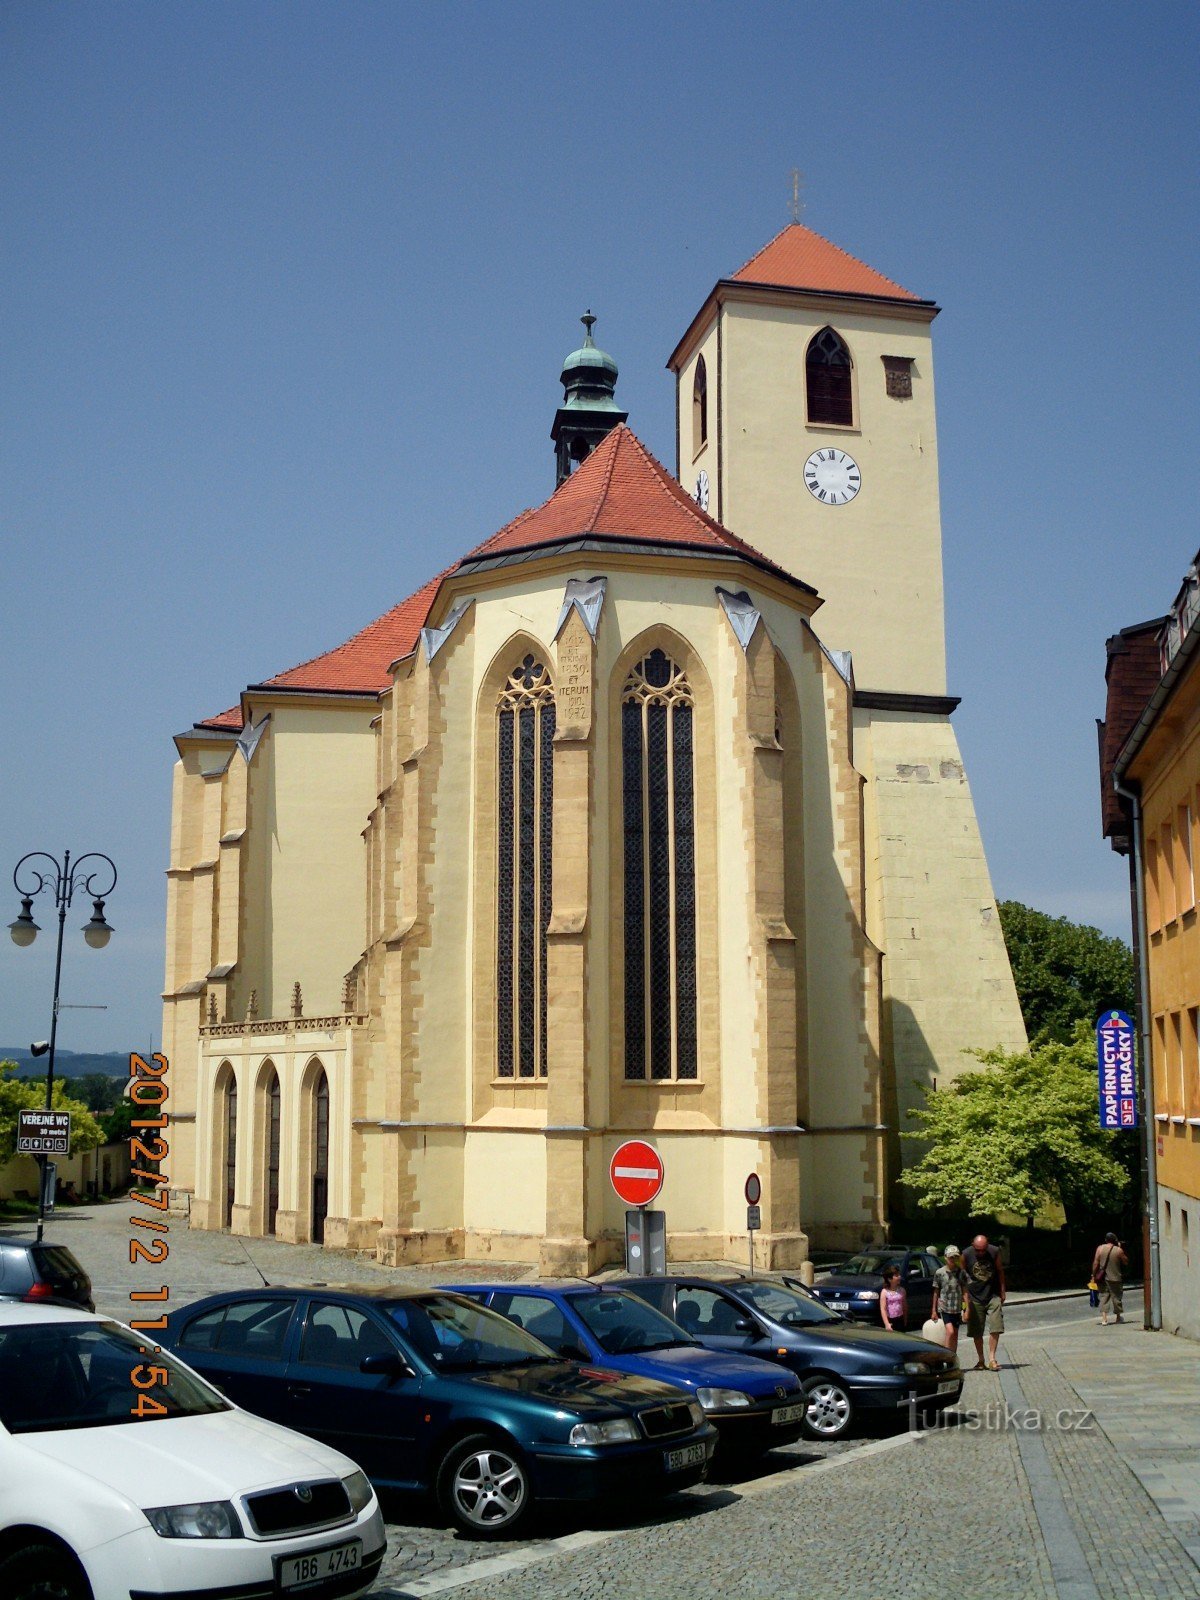 Boskovice - the church of St. Jakub the Elder